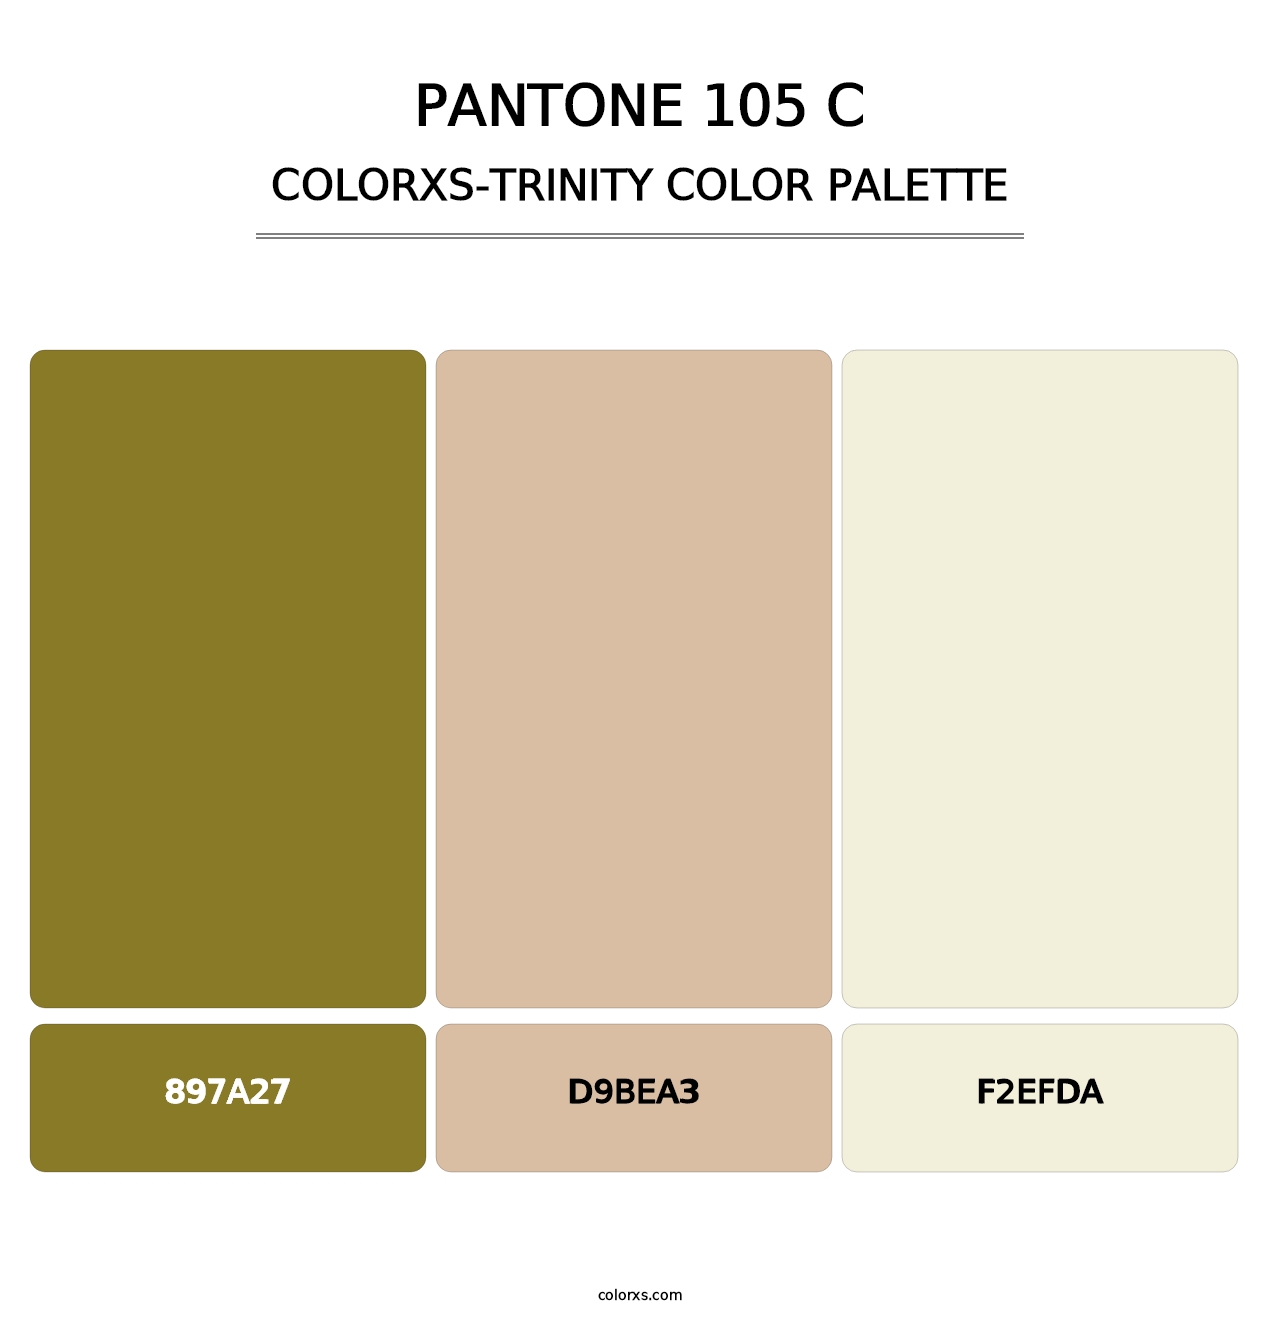 PANTONE 105 C - Colorxs Trinity Palette